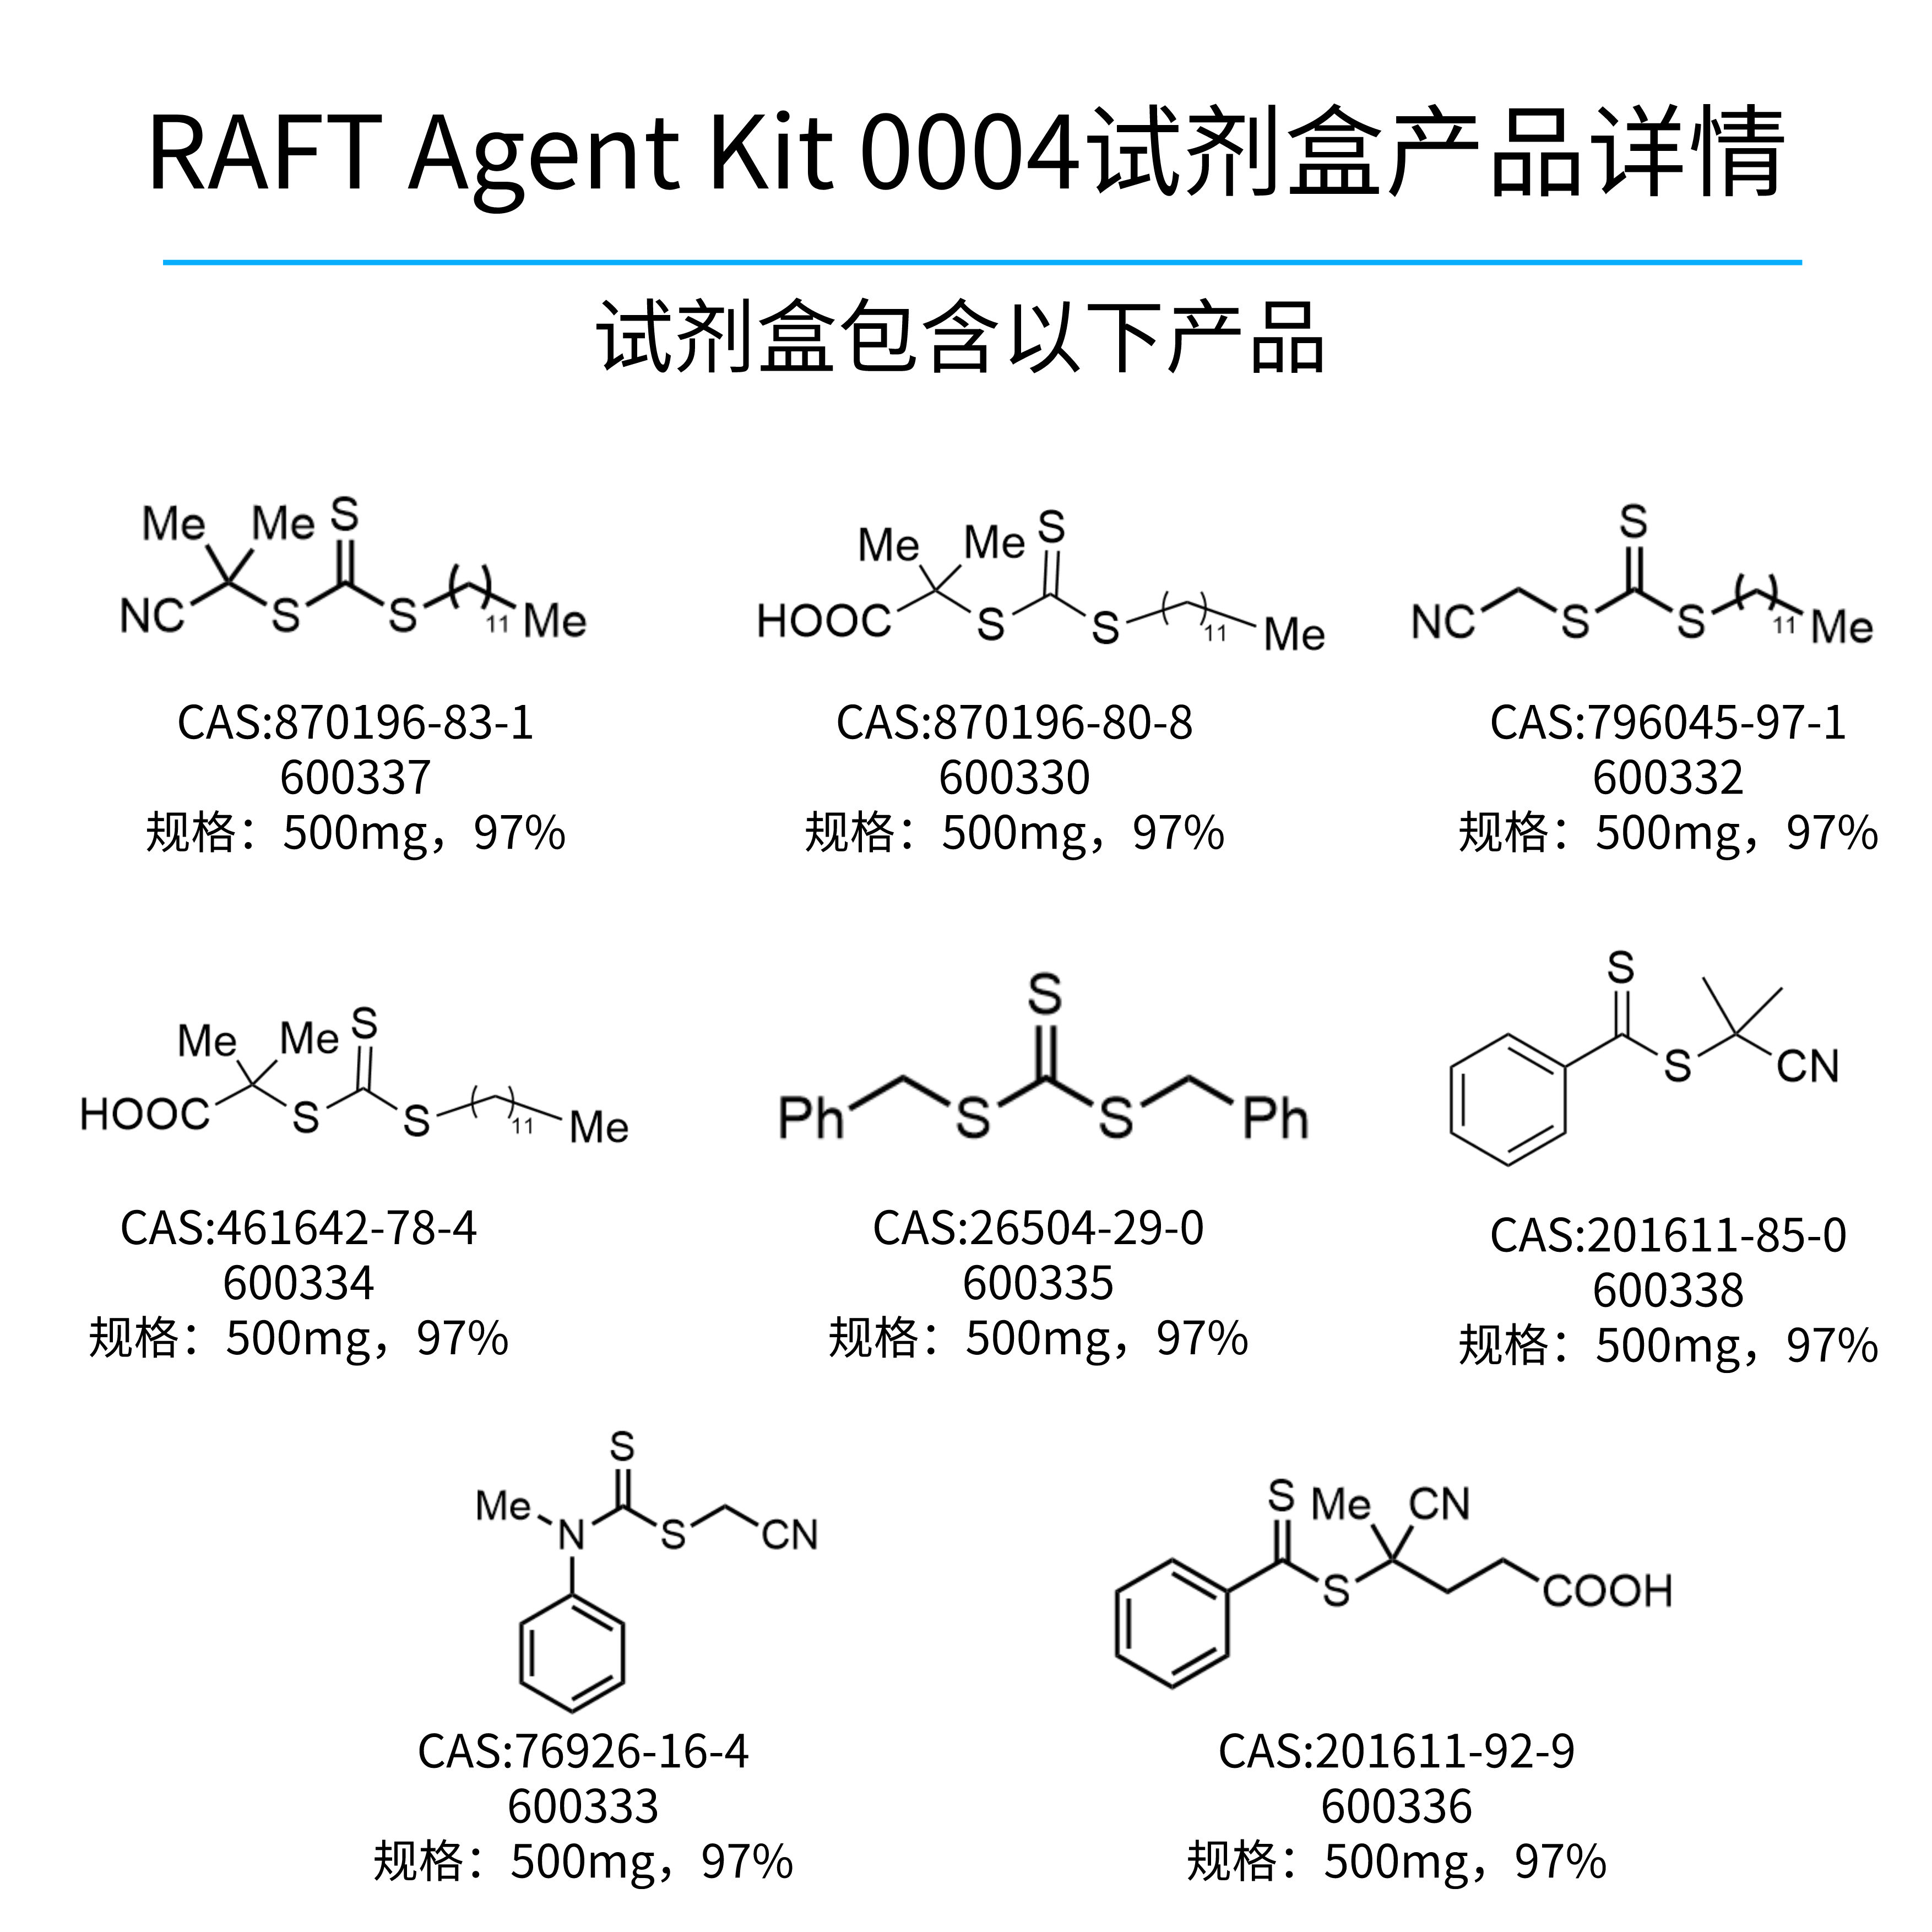 RAFT Agent Kit 0004